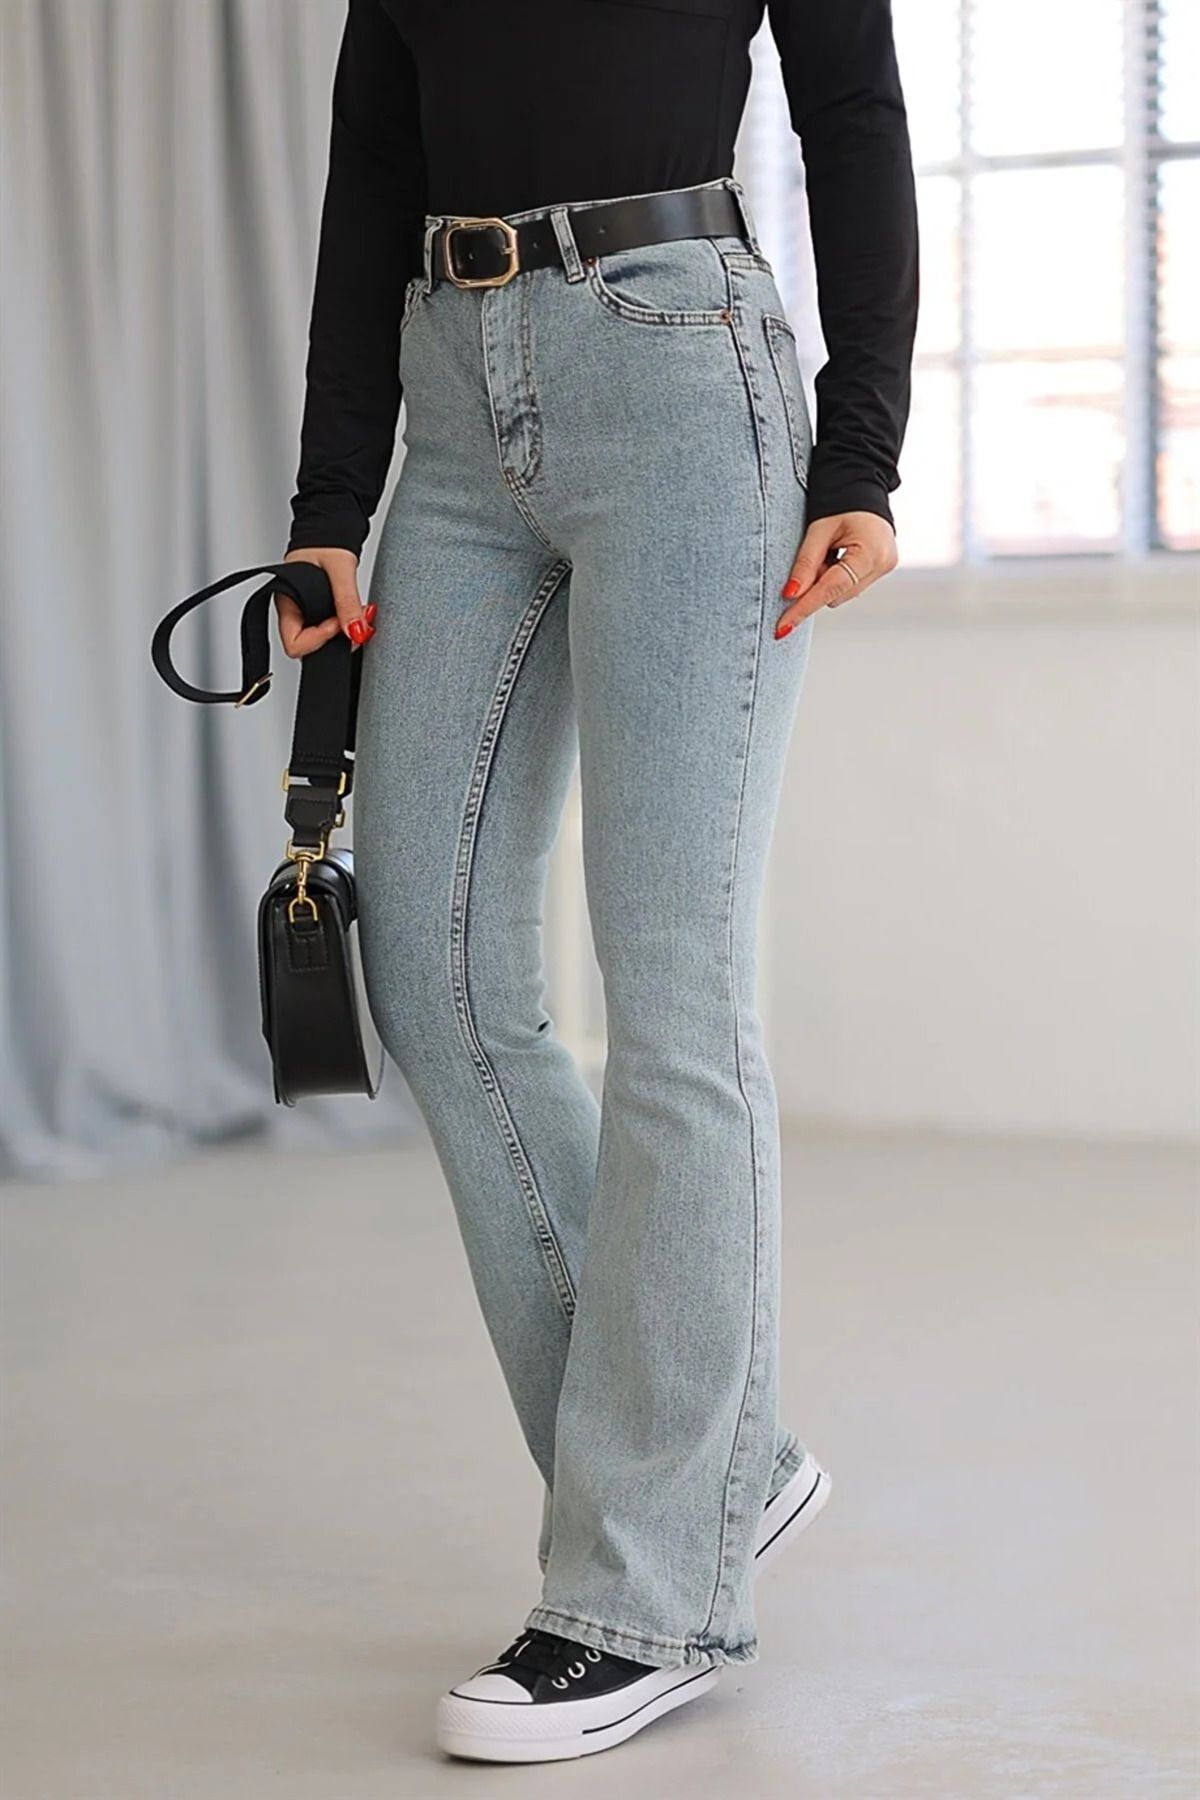 MAKRAS EXCLUSIVE Kadın Jeans Mavi Yüksek Bel Likralı Esnek Ispanyol Paça Kot Pantolon Jeans